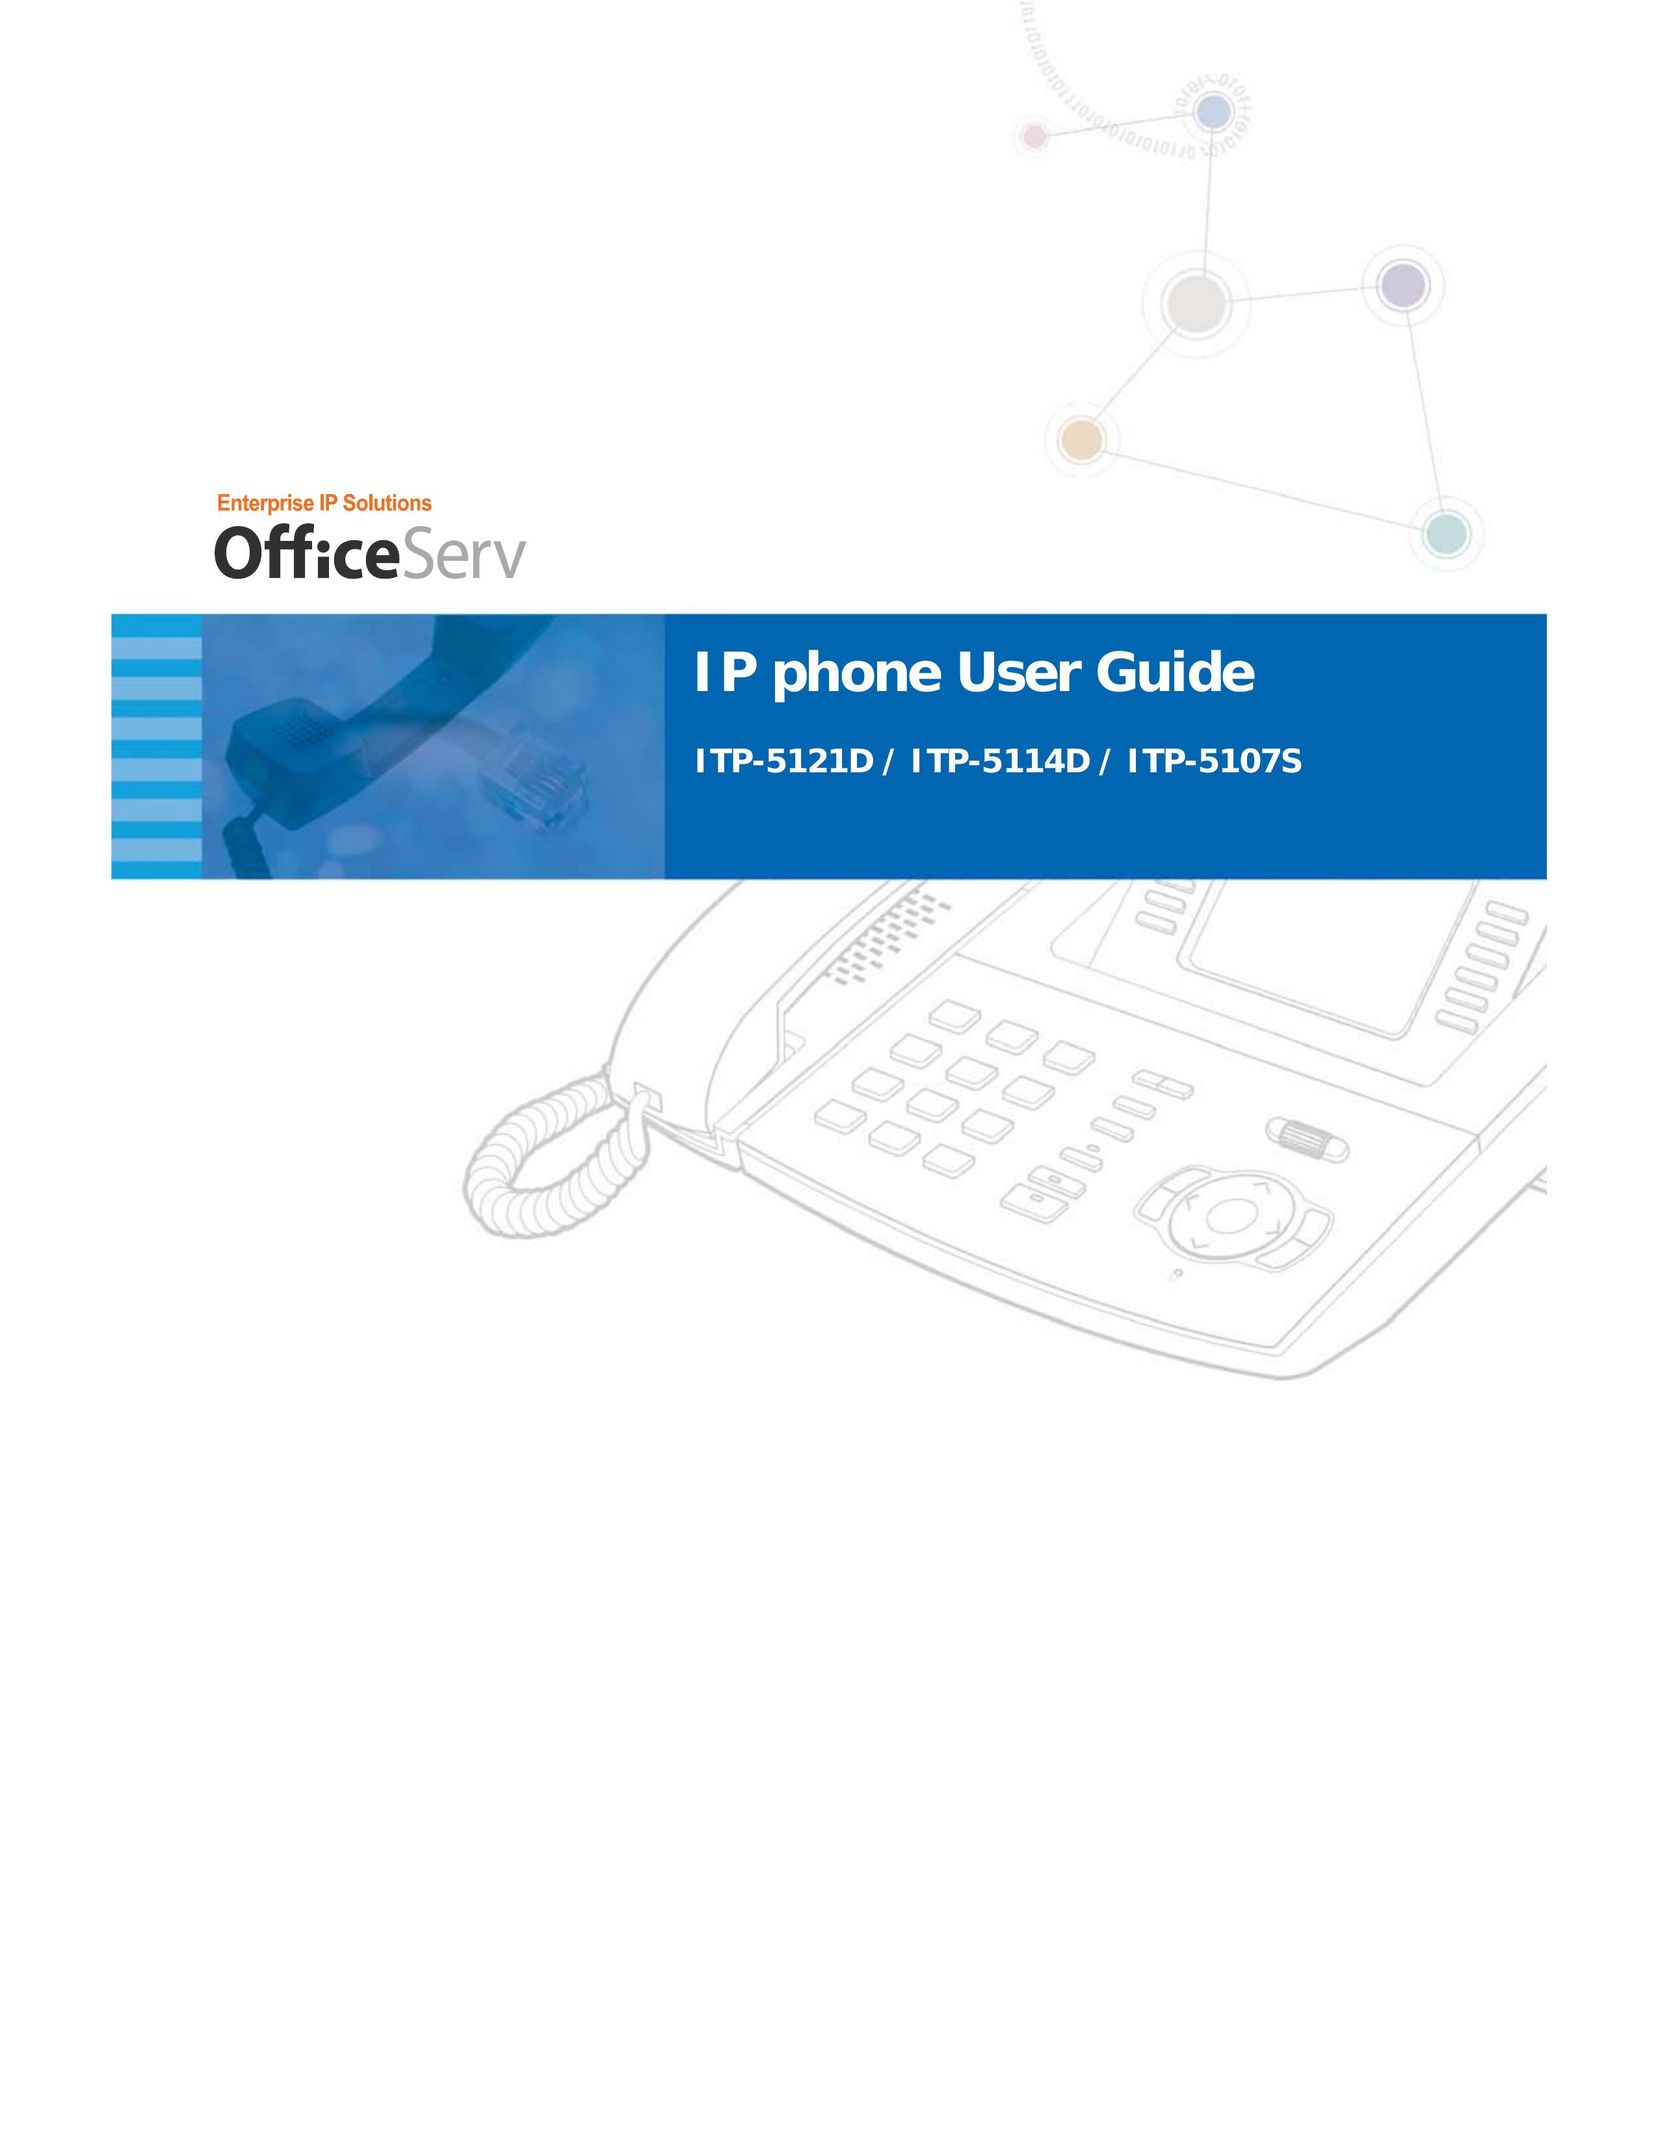 Samsung ITP-5107S Telephone User Manual